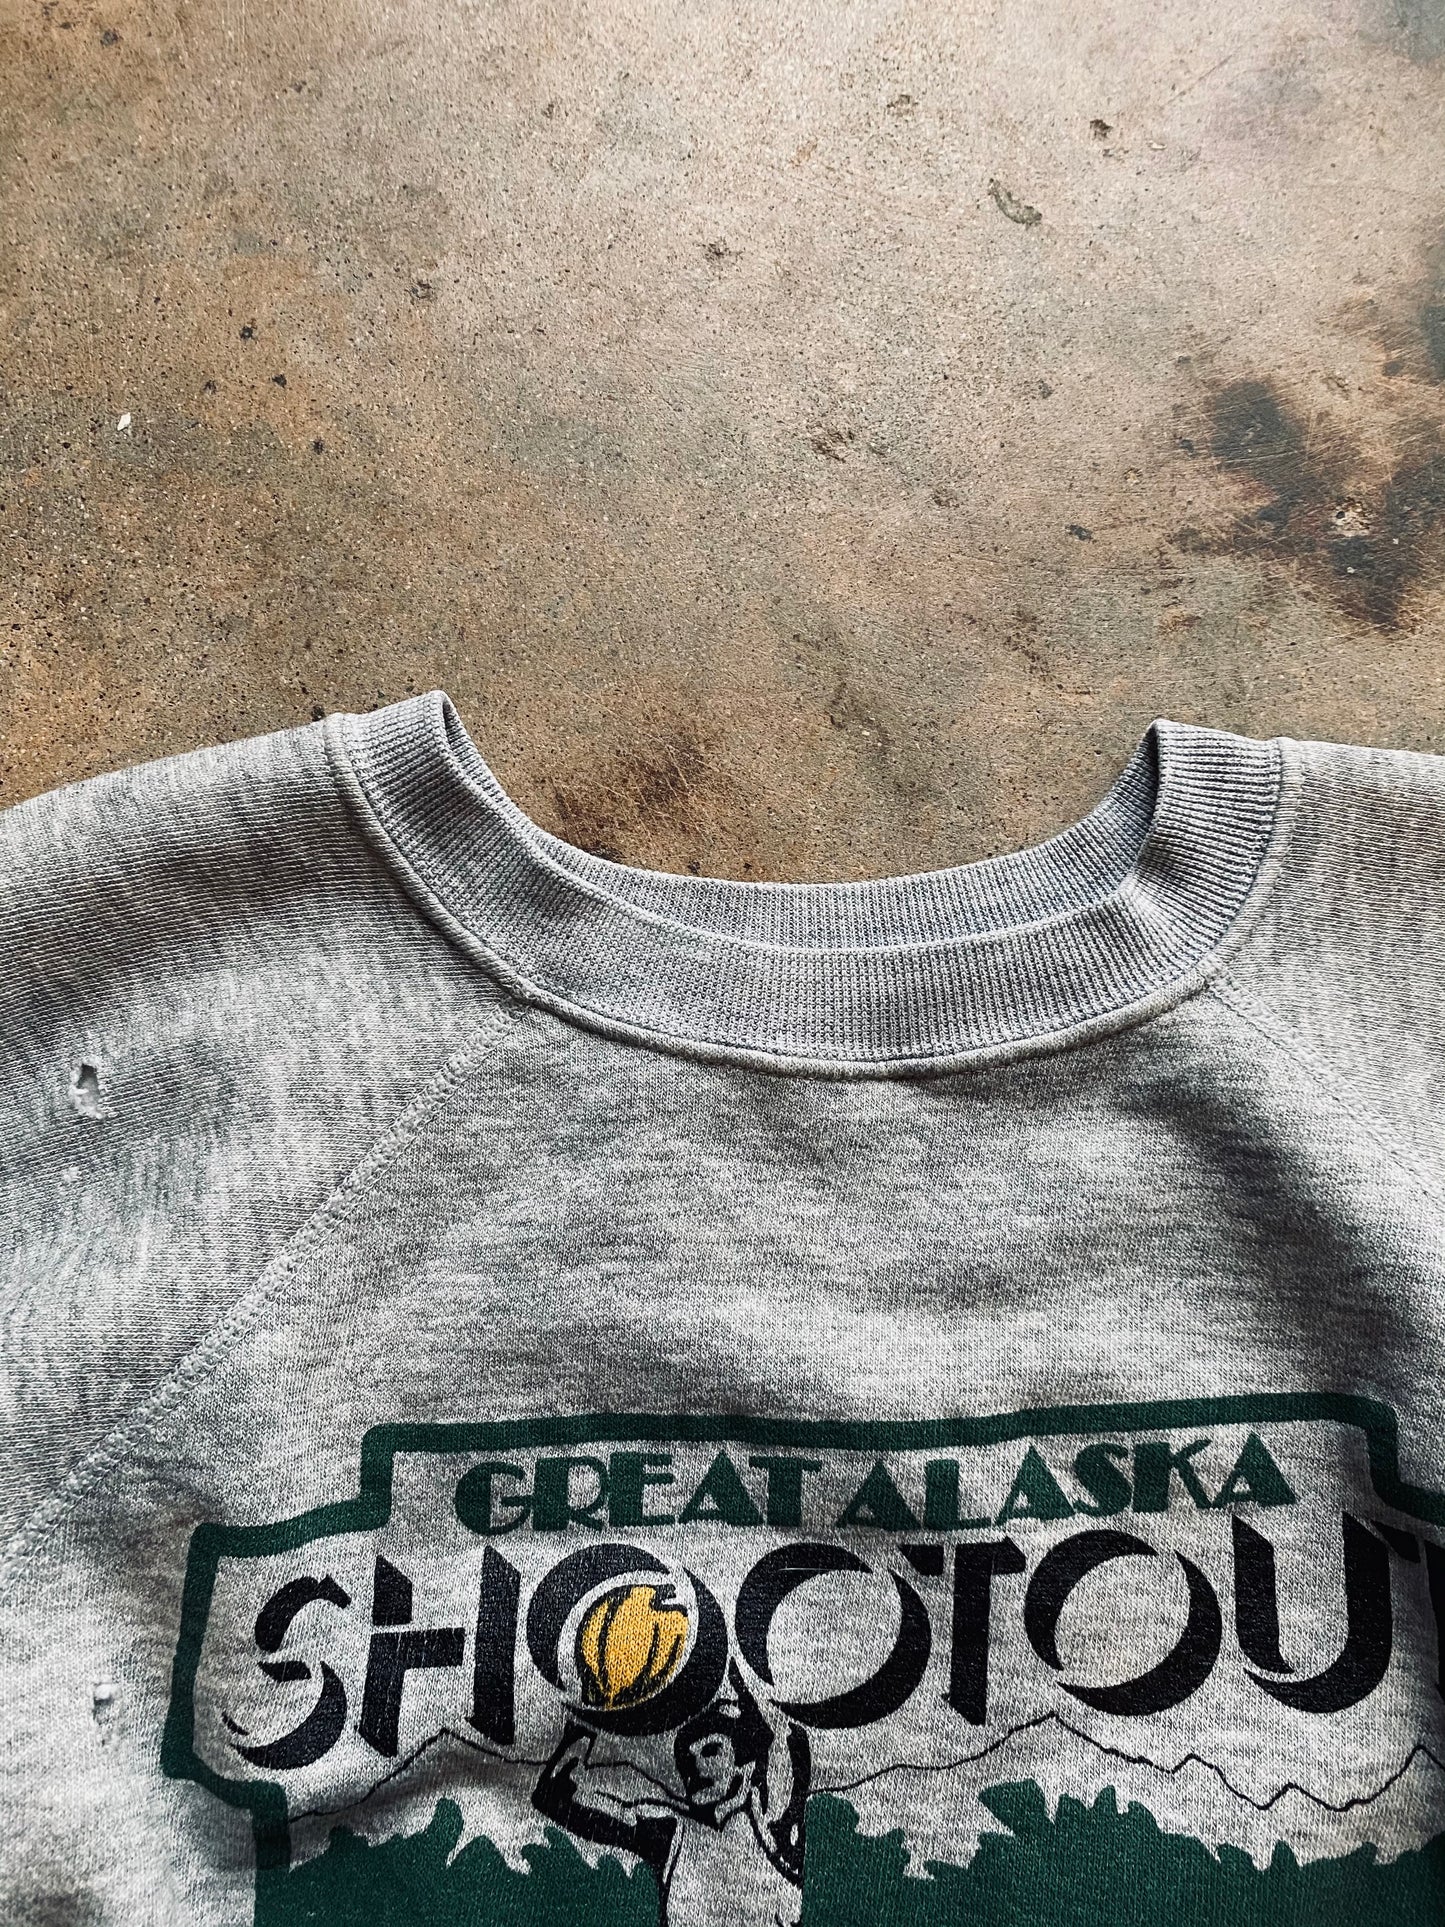 1989 Ultra Sweats “Great Alaska Shootout” Sweatshirt